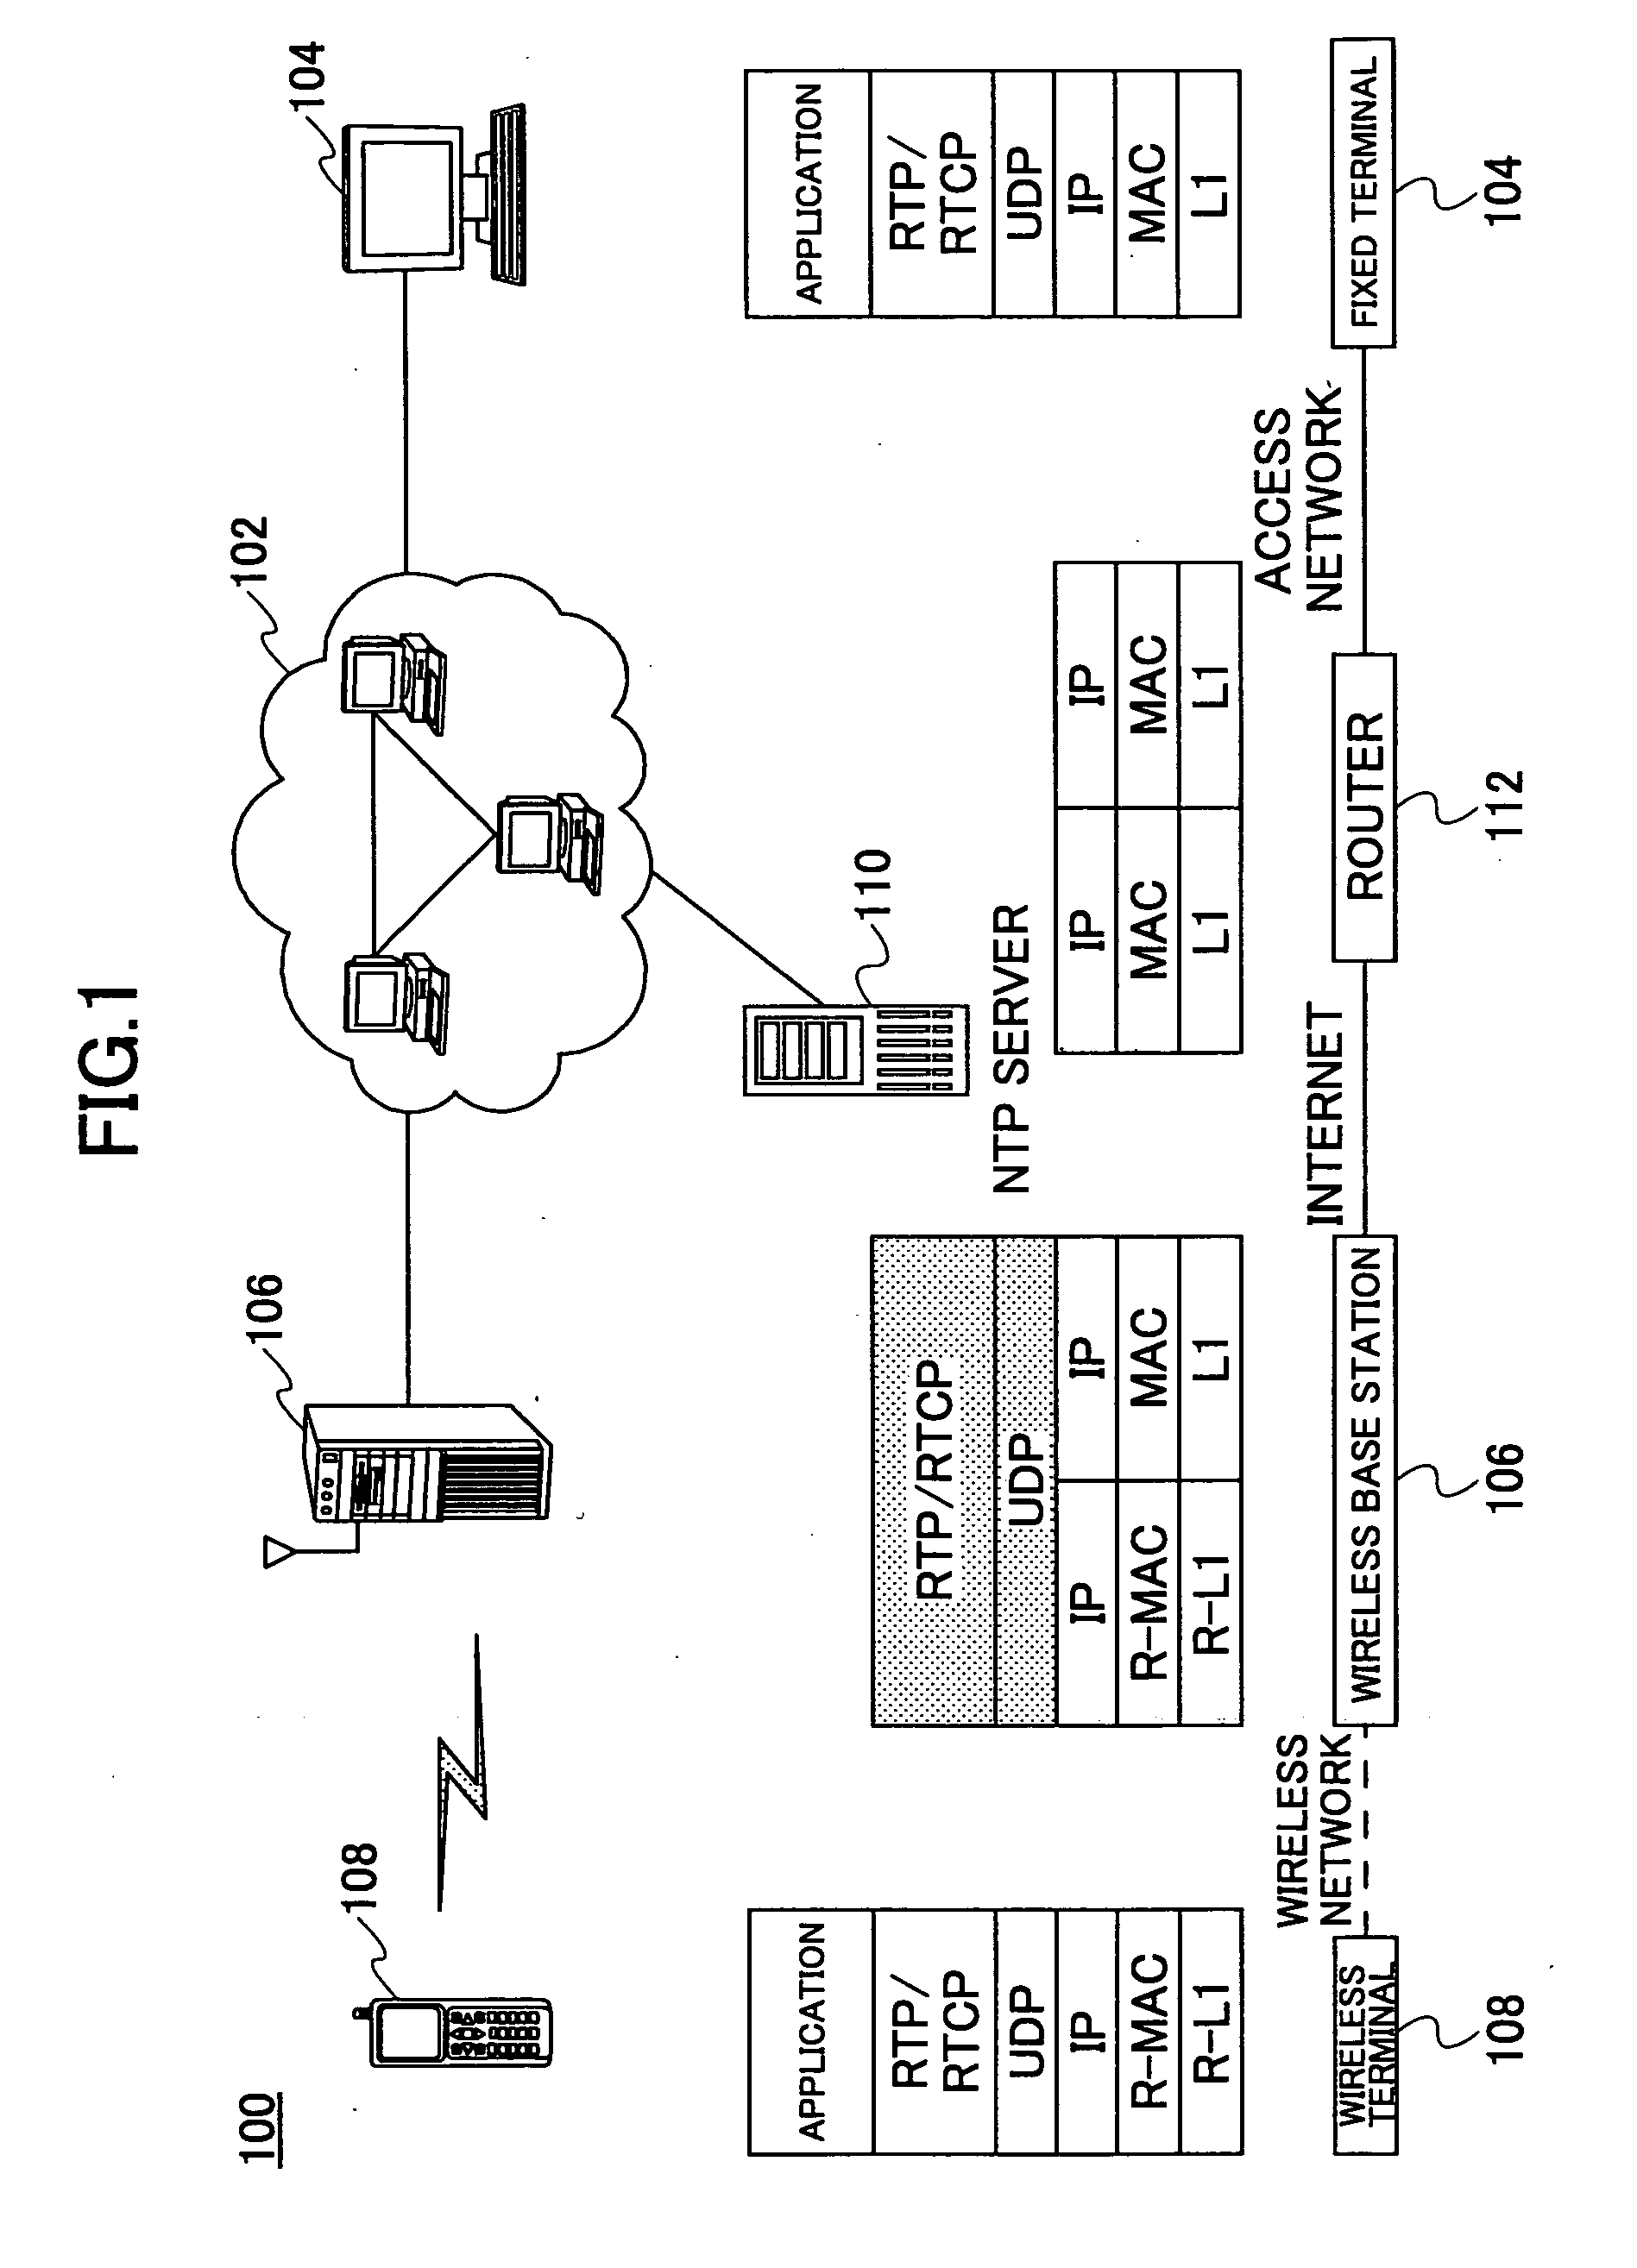 Transmission parameter control device